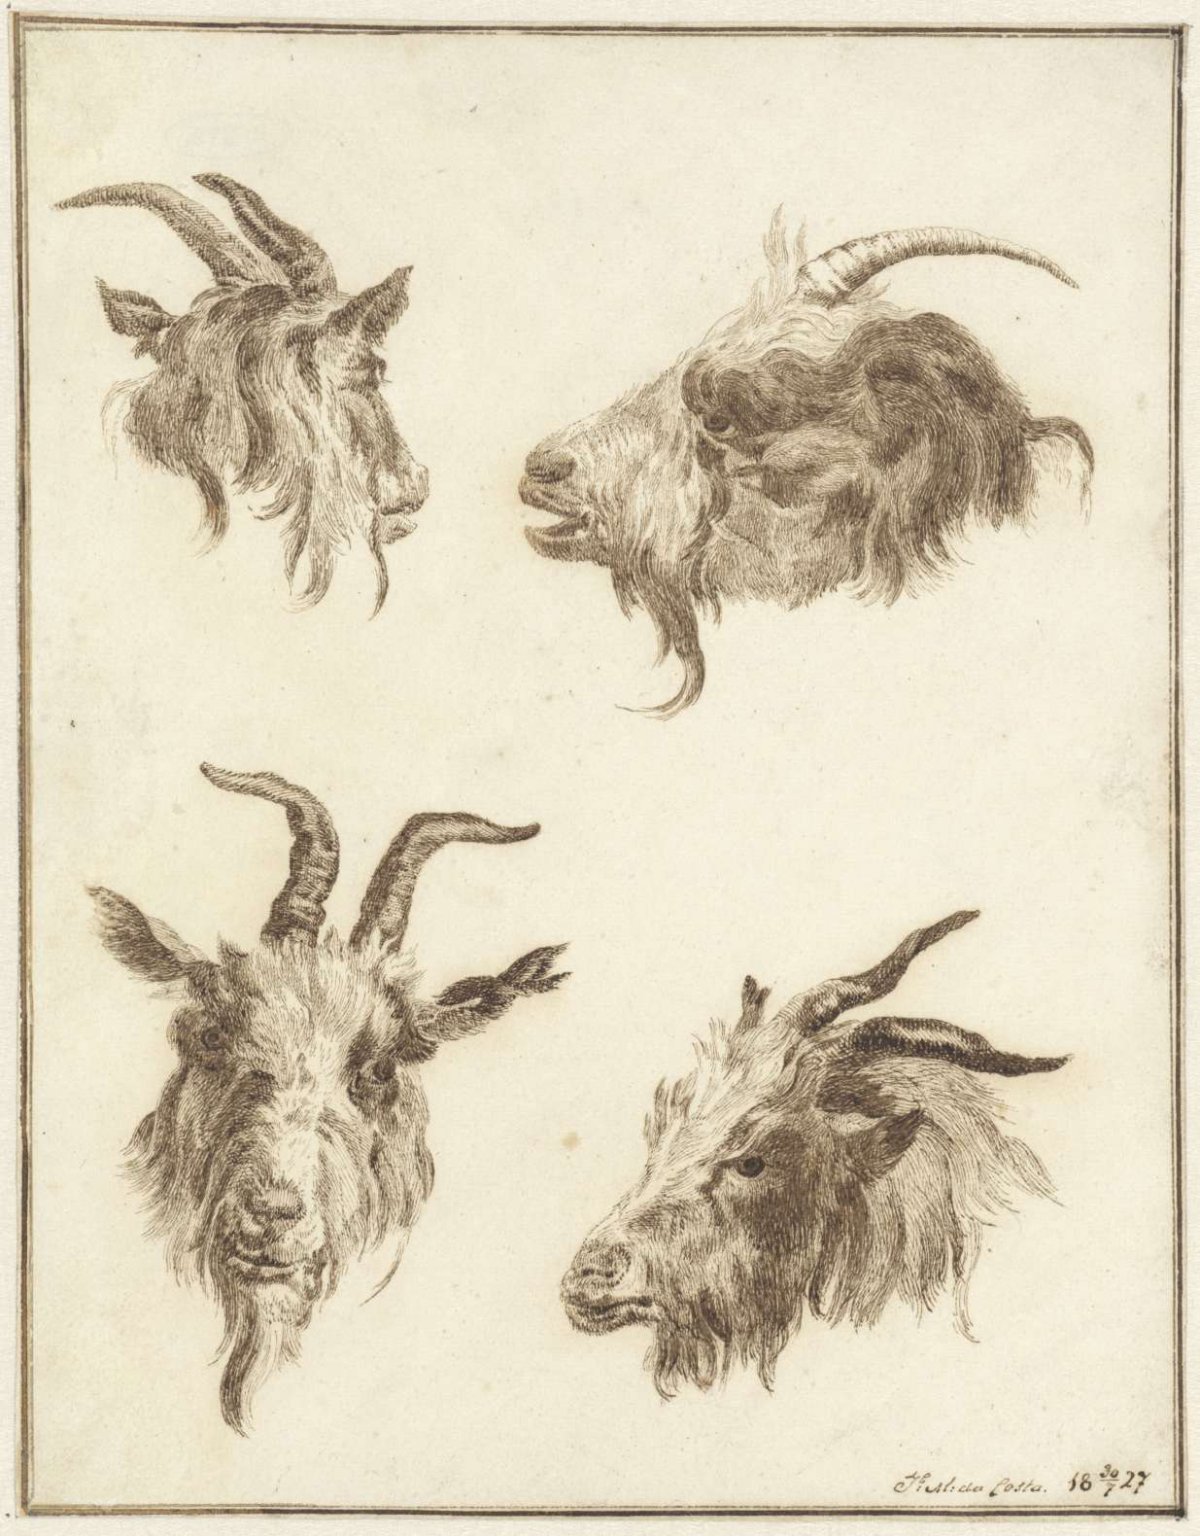 Four studies of goat heads, Joseph Mendes da Costa (1806-1893), 1827